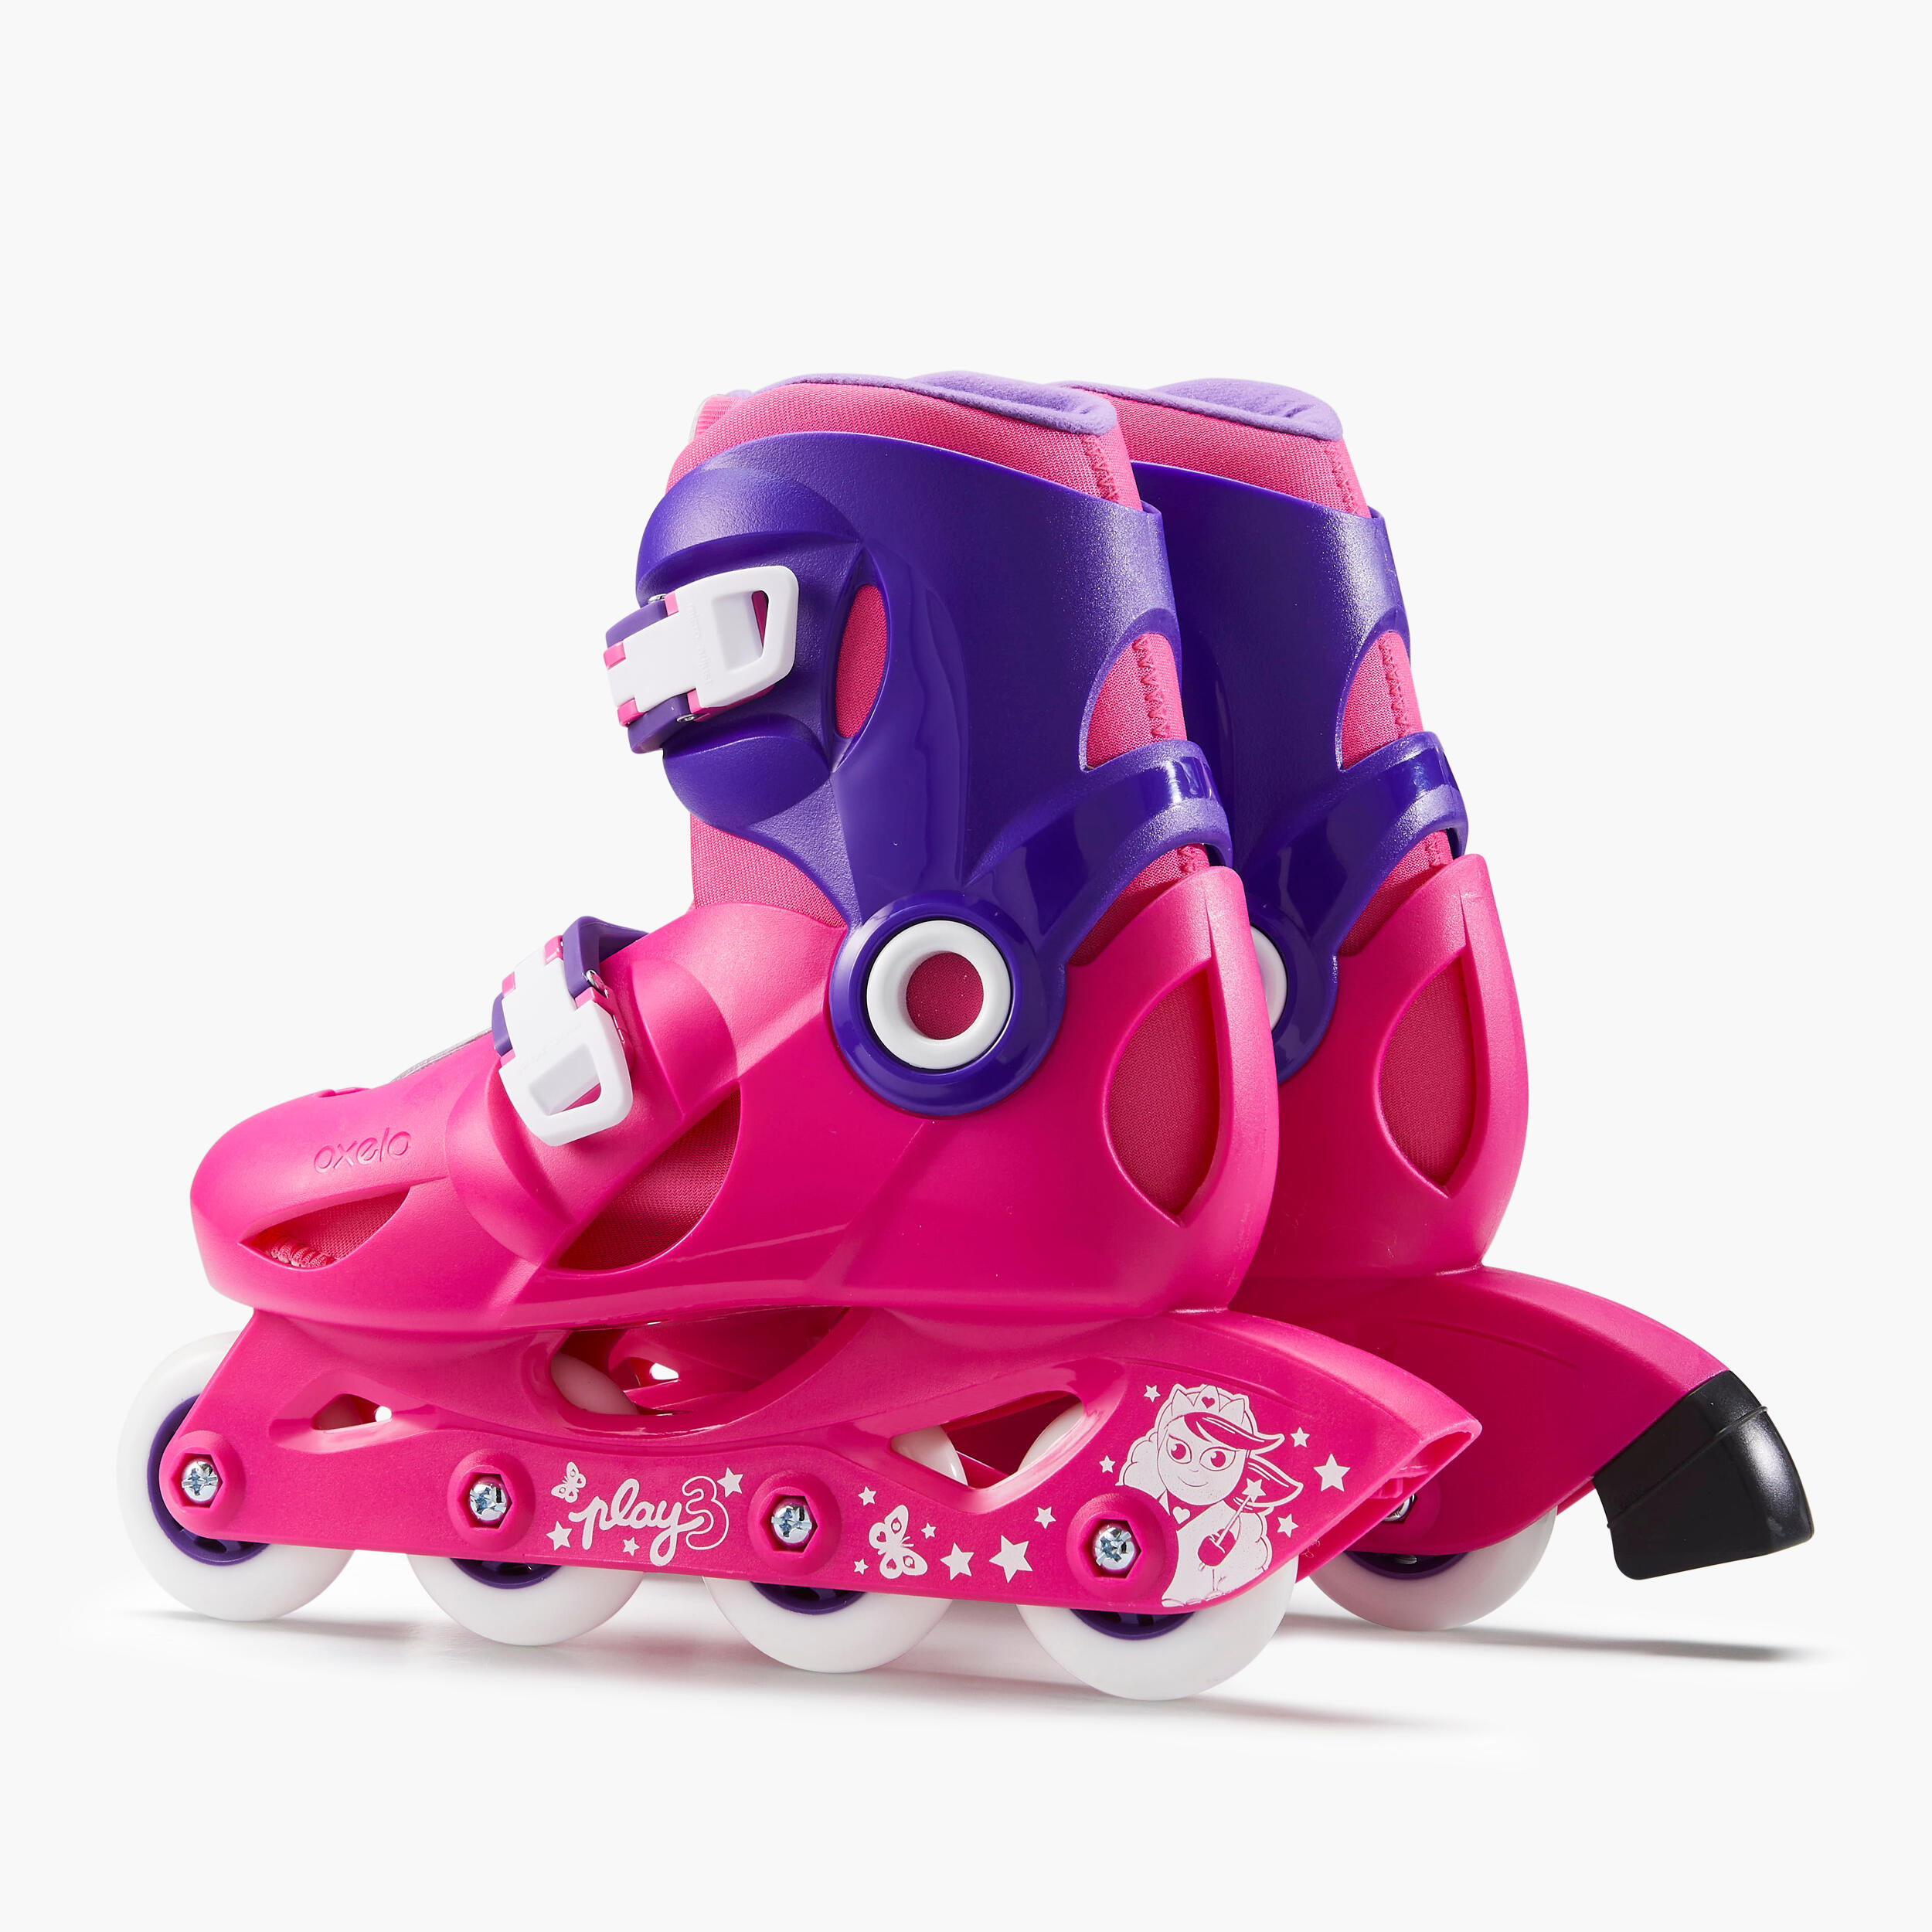 Kids' In-line Skates - Play 3 Pink/Purple - OXELO